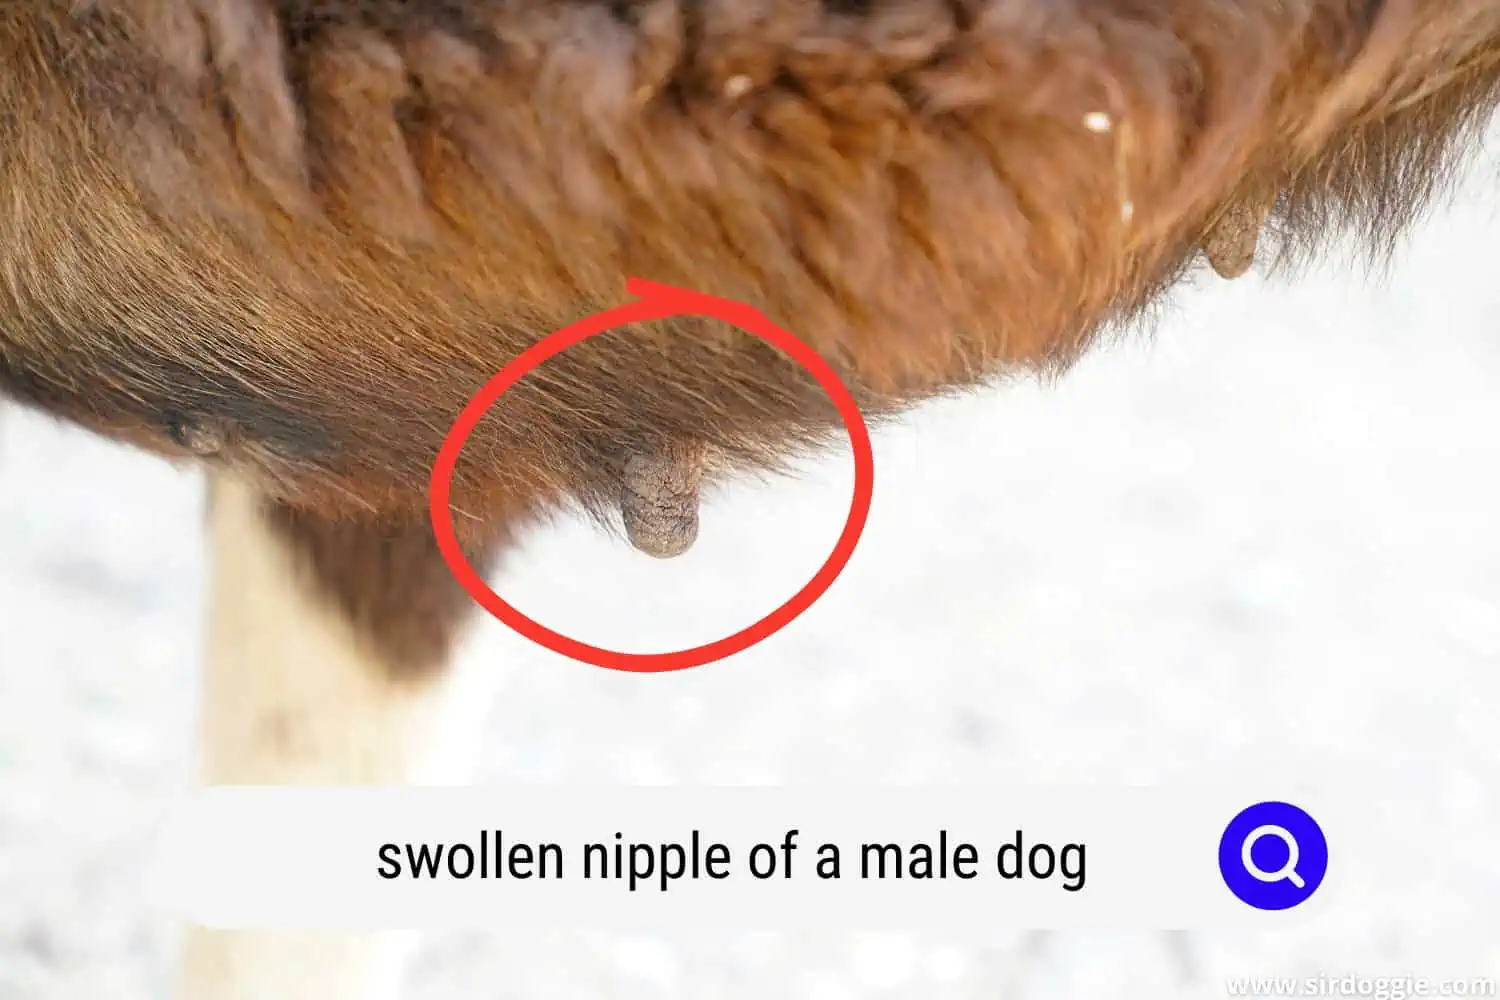 A swollen nipple of a male dog